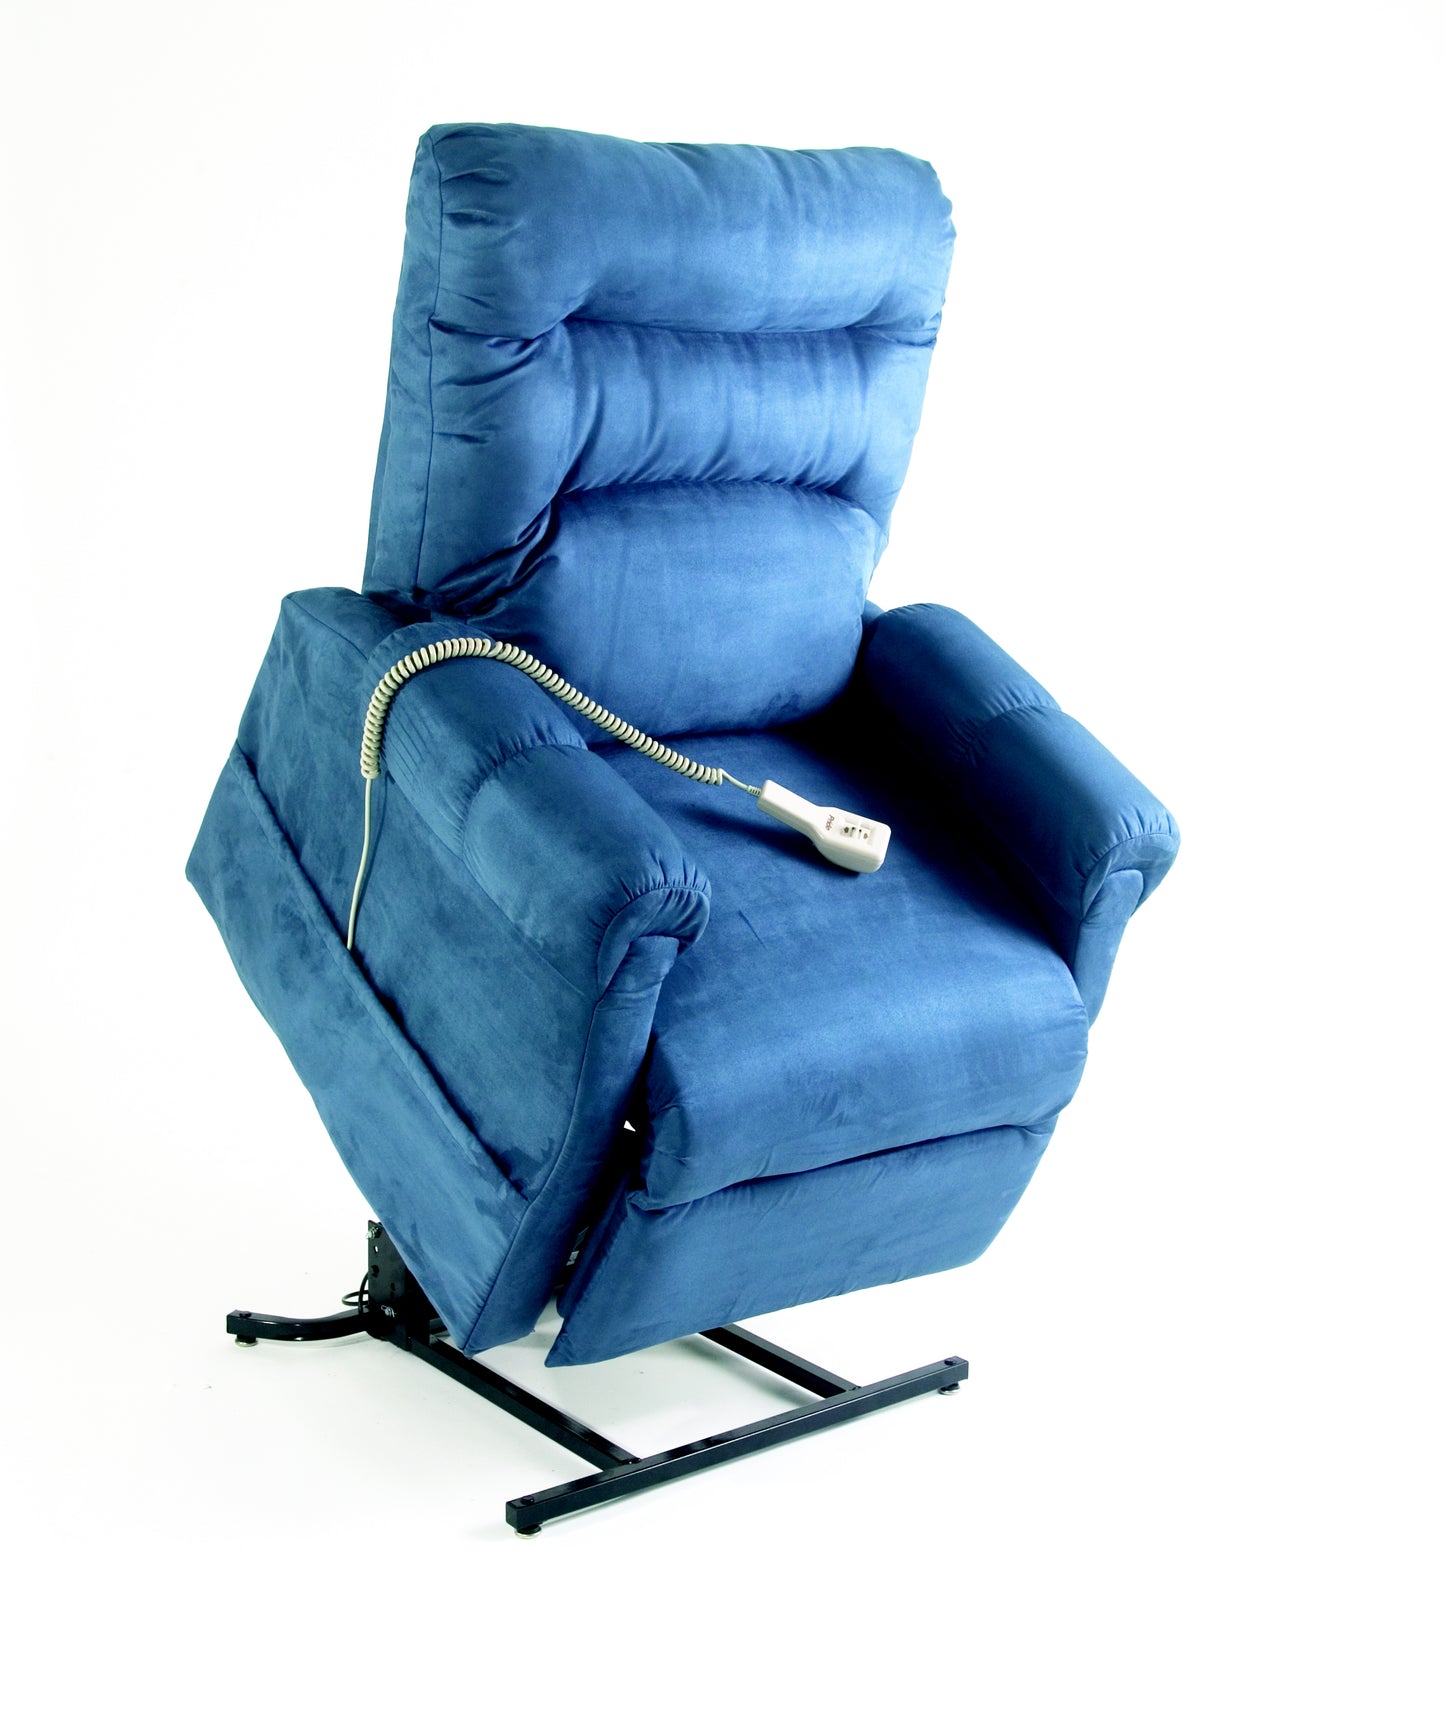 C5 Recliner/Lift Chair Artic Blue